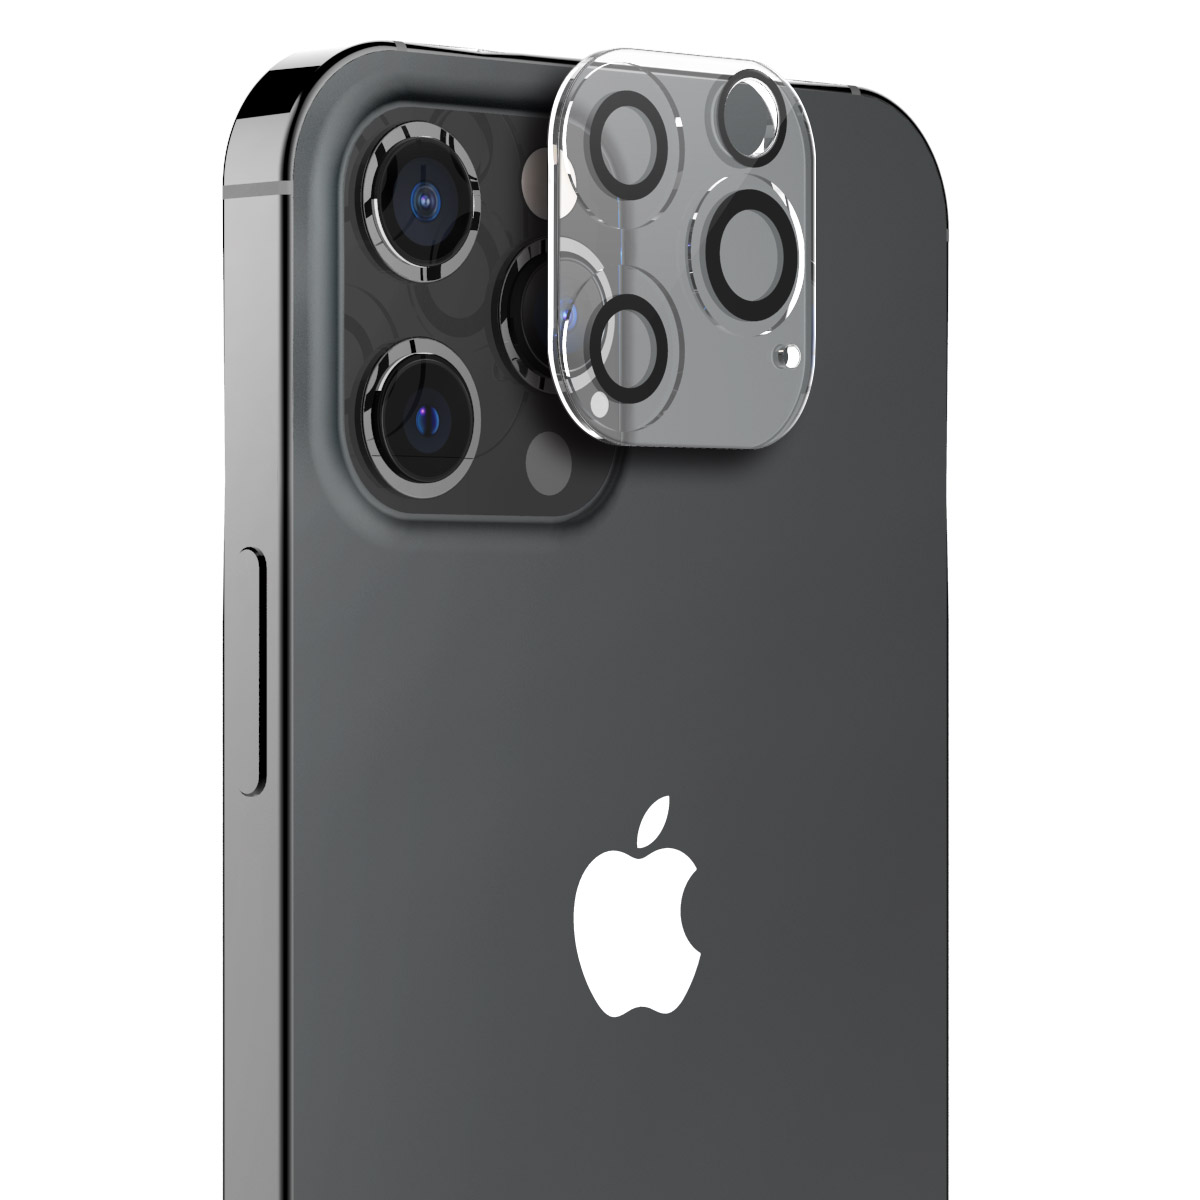 Araree C-Sub Corecamera Lens Tempered Glass For iPhone 12 Pro Max - Clear